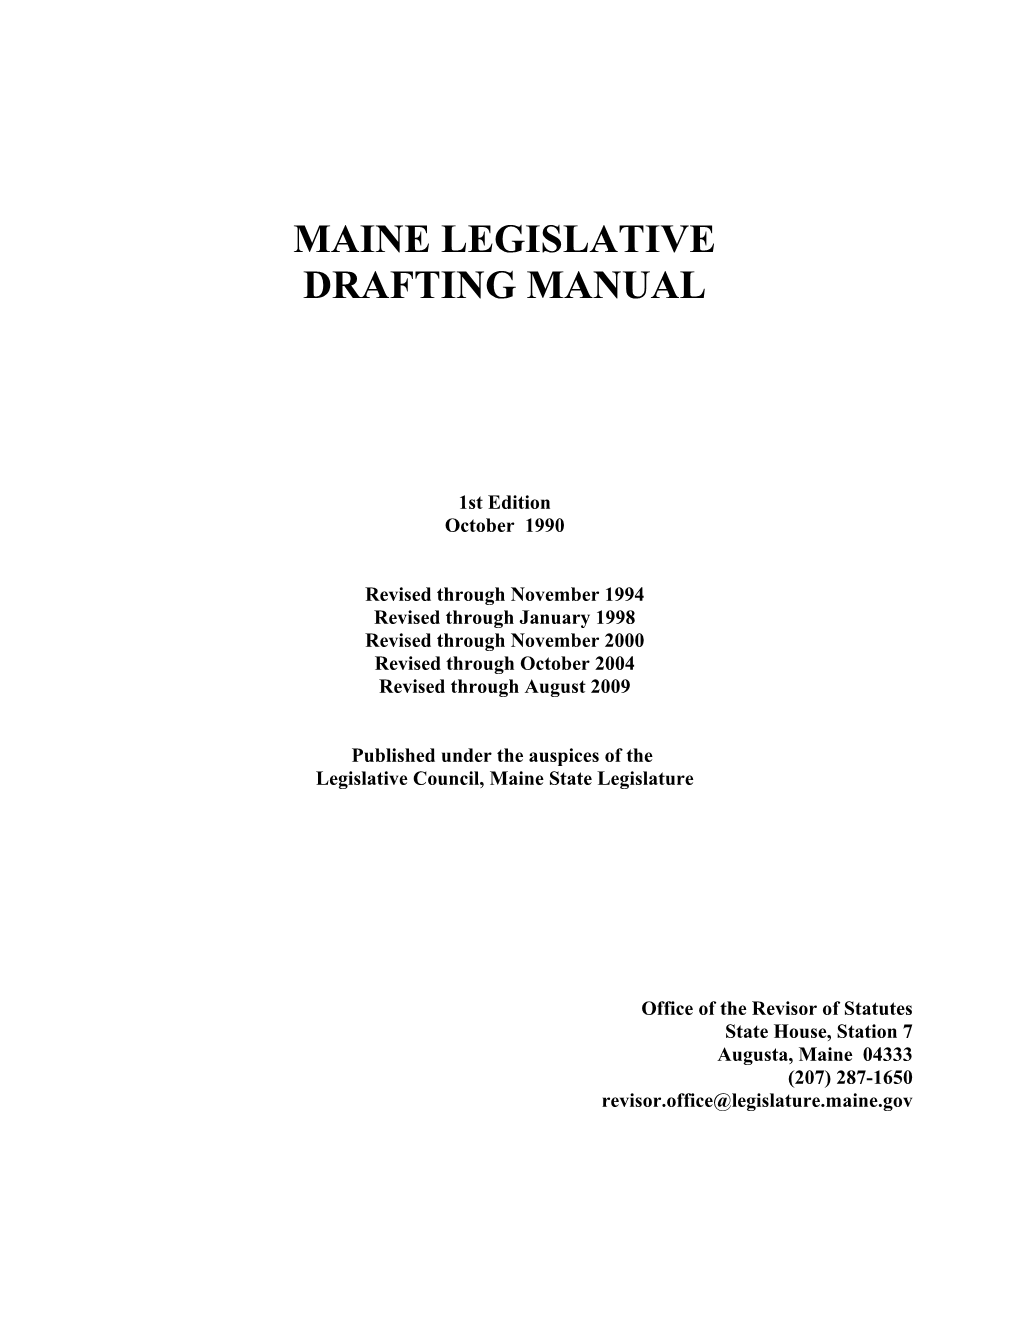 Maine Drafting Manual